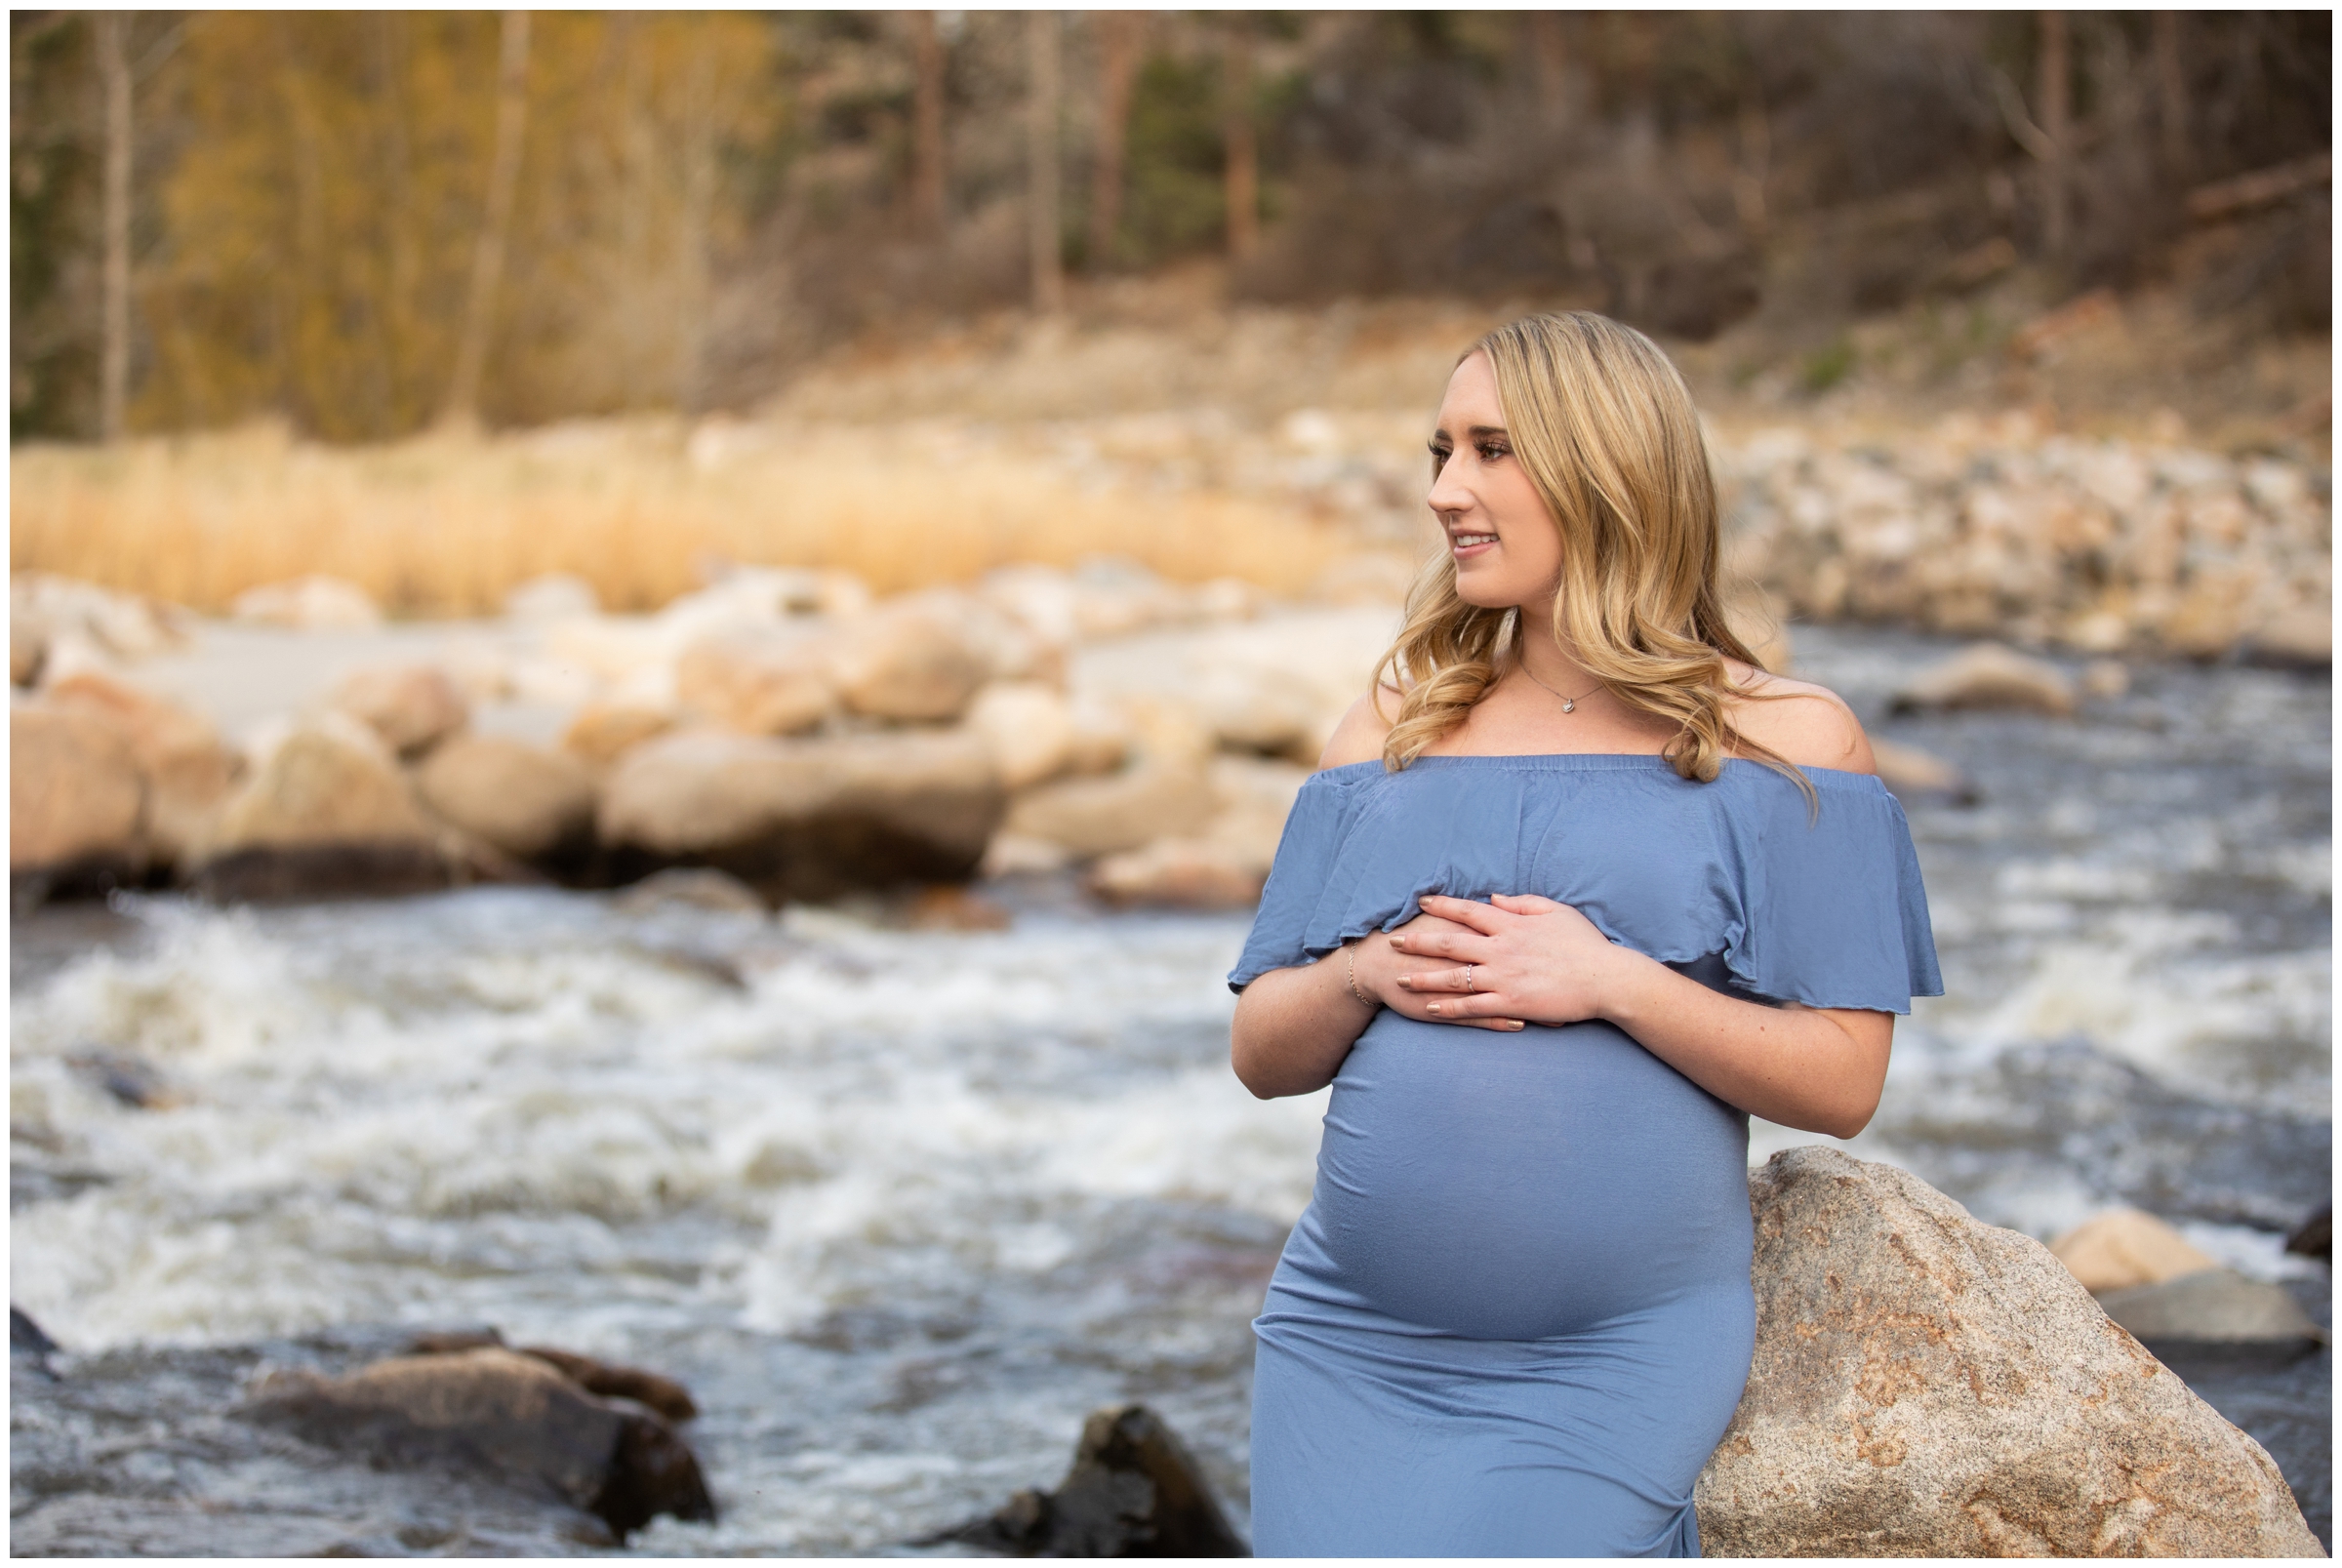 Loveland maternity photos at Viestenz-Smith Mountain Park by Colorado portrait photographer Plum Pretty Photography